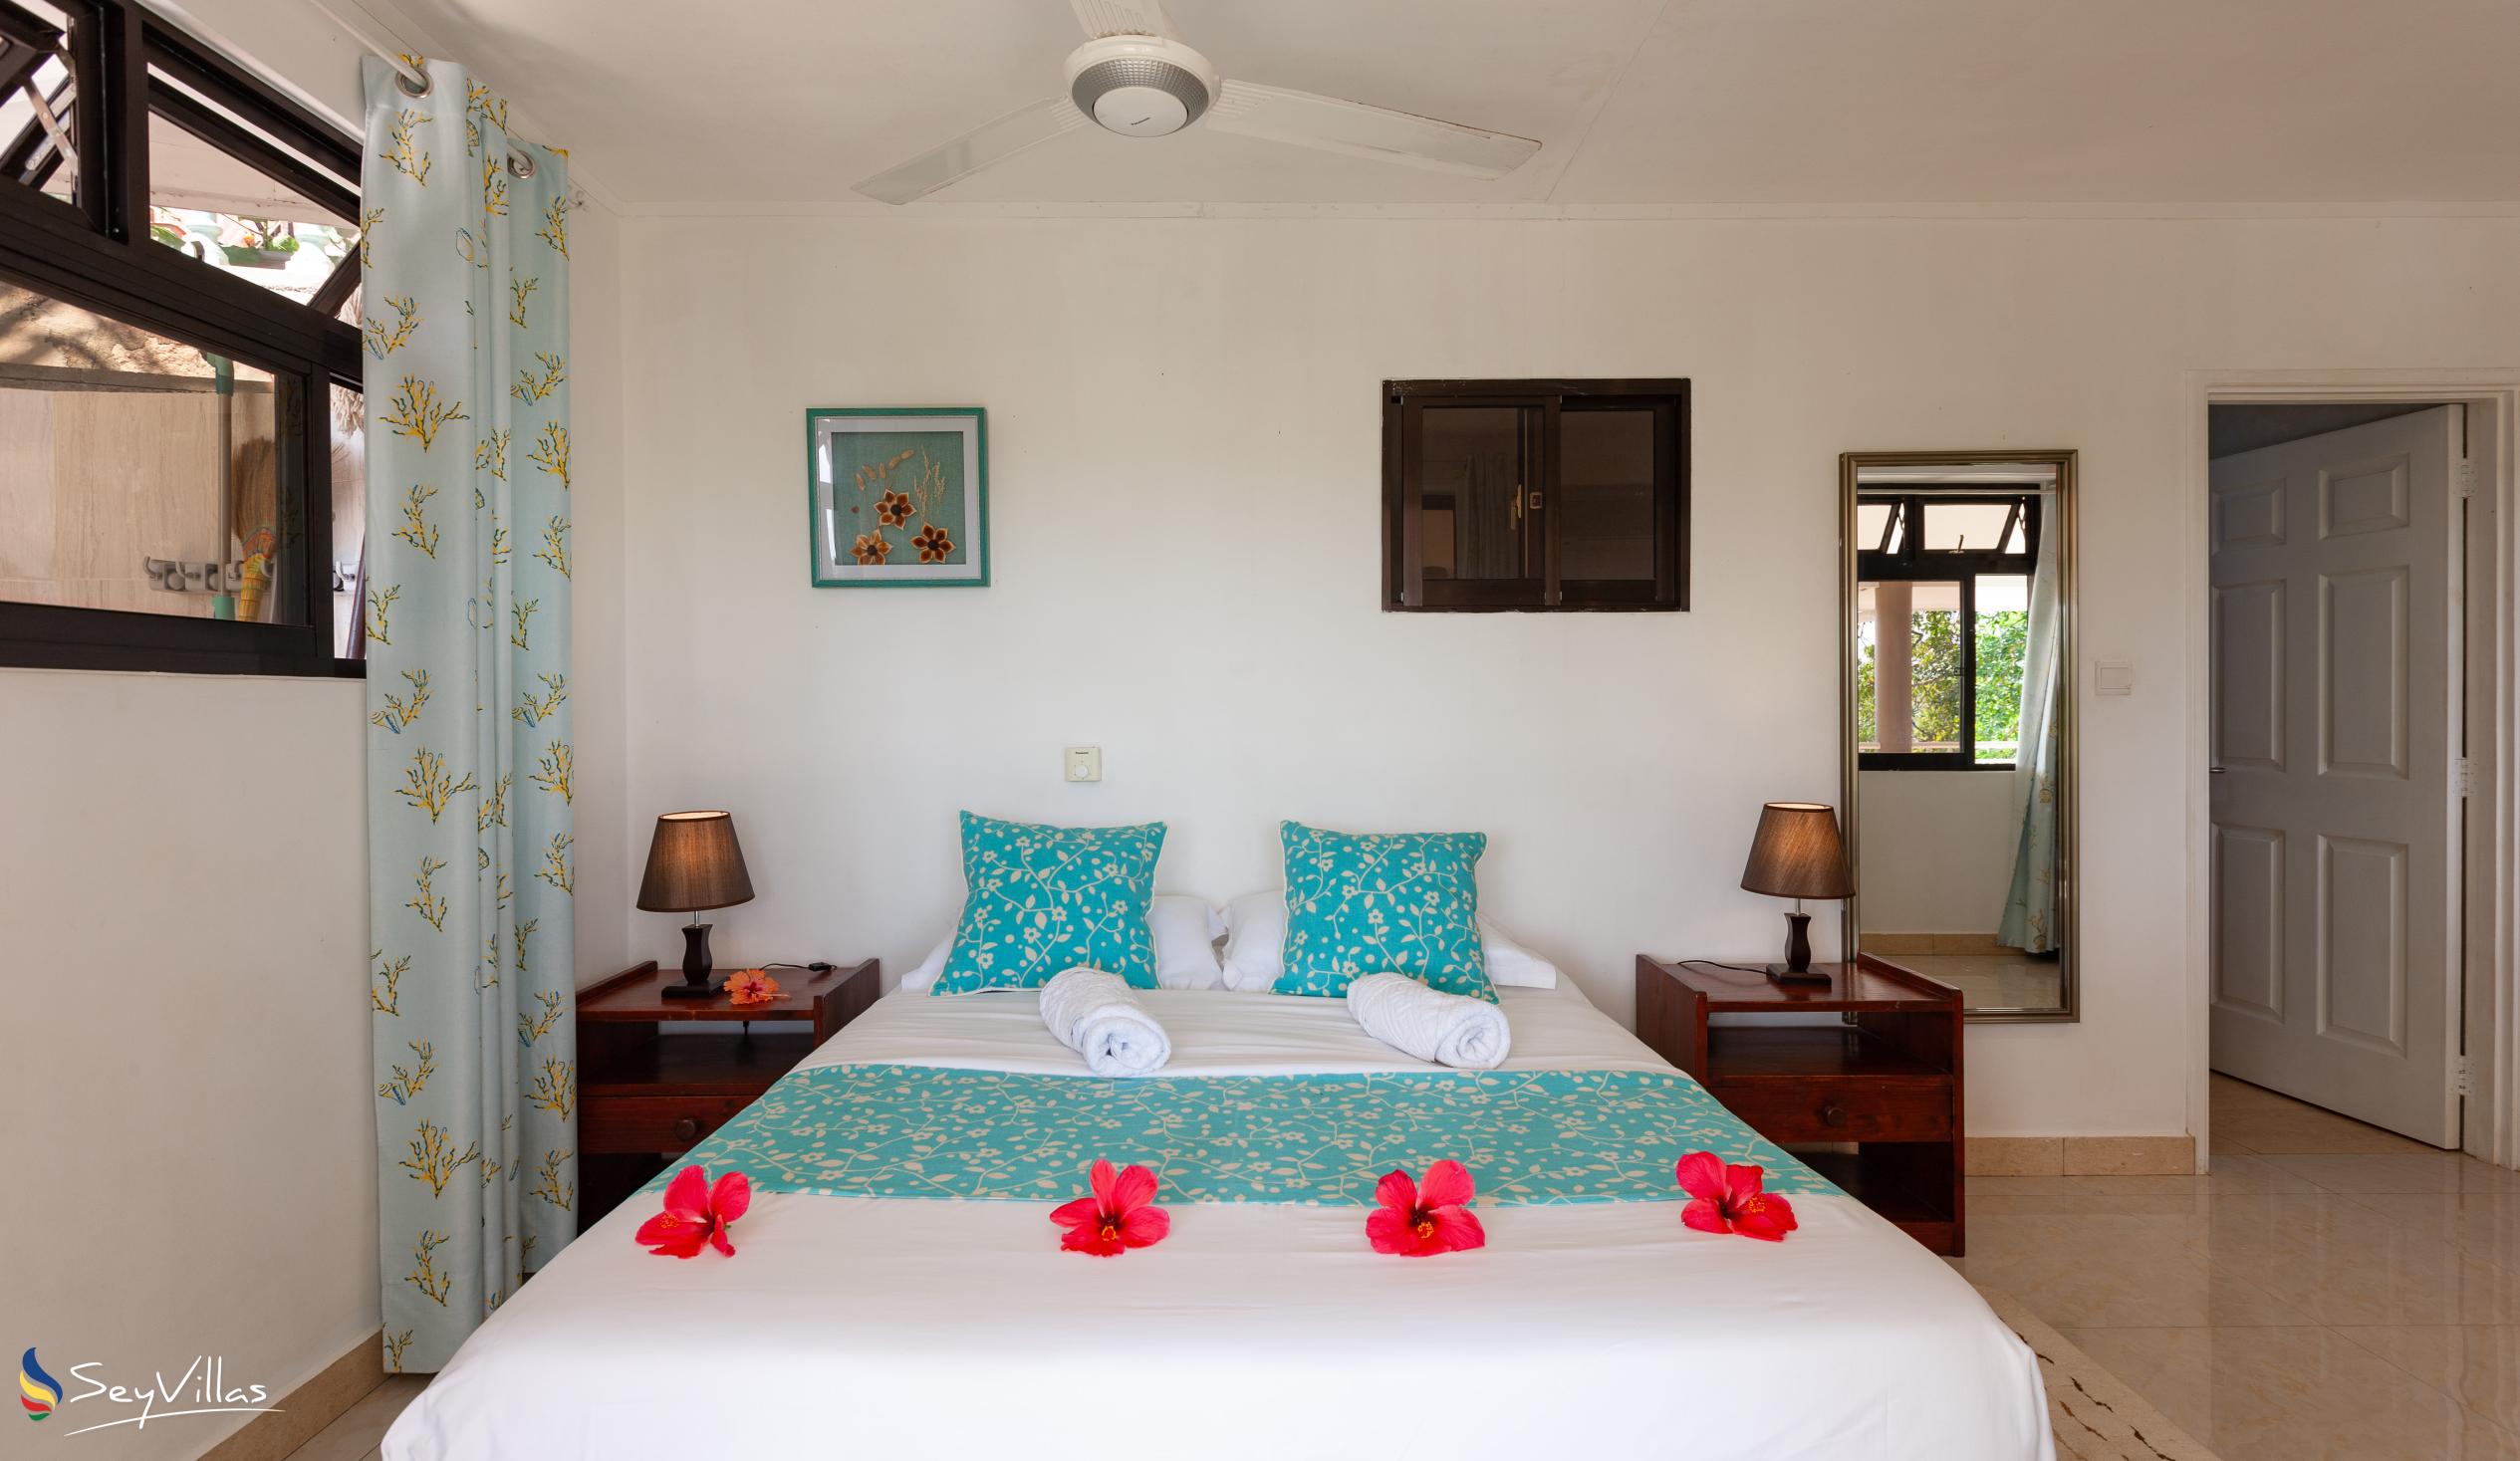 Photo 27: Myra's Self Catering Apartment - 1-Bedroom Apartment - Praslin (Seychelles)